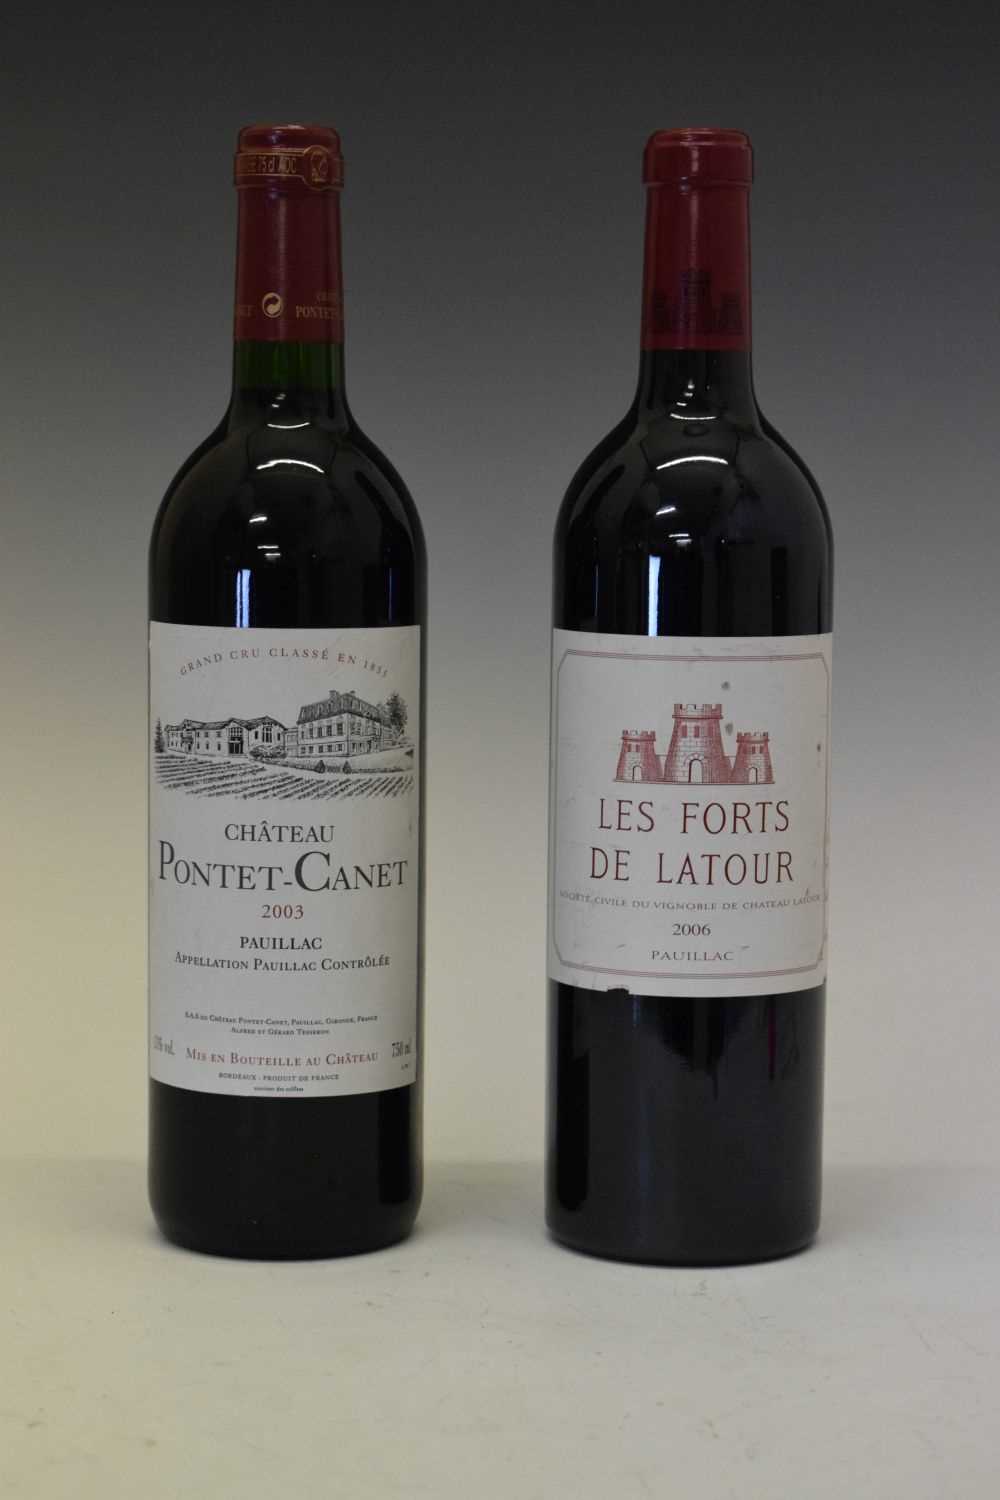 Bottle of Chateau Latour 'Les Forts de Latour' 2006 and a bottle of Chateau Pontet-Canet 2003 - Image 8 of 8